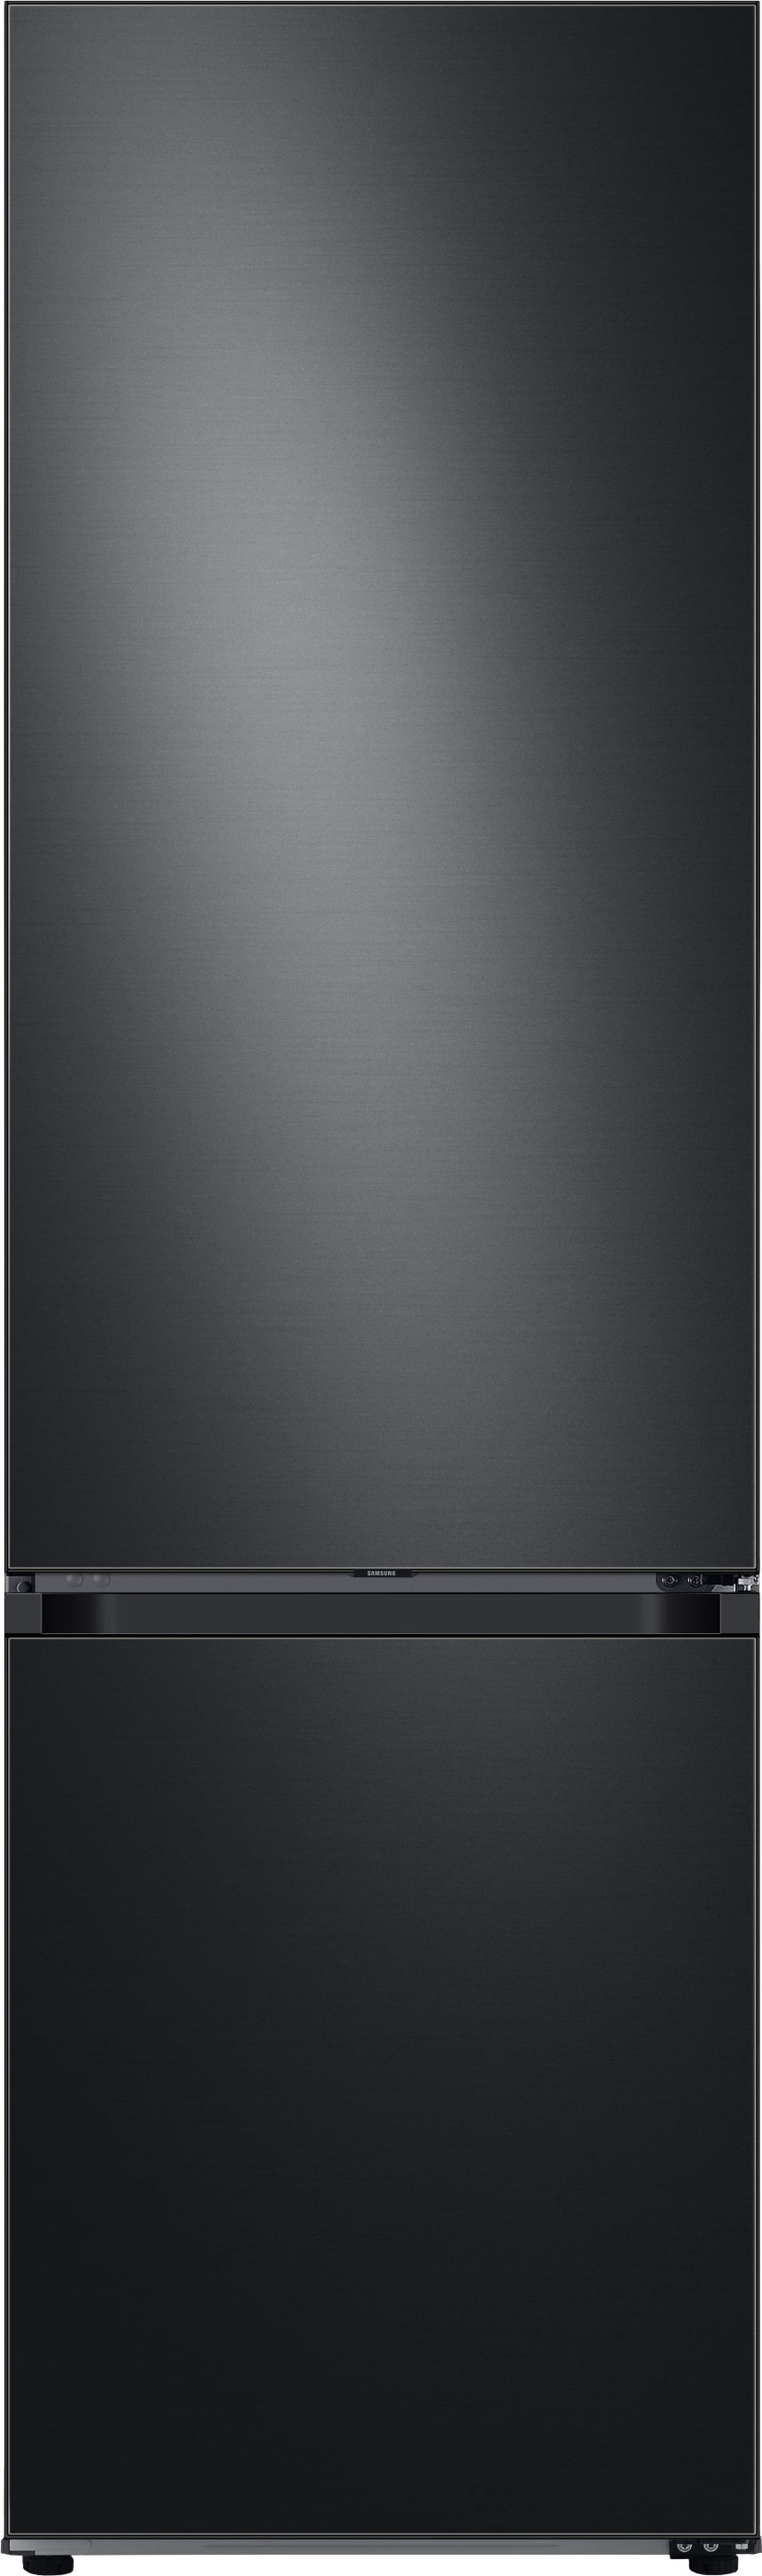 Samsung Bespoke Series 8 RB38C7B5CB1 Wifi Connected 70/30 No Frost Fridge Freezer - Black - C Rated, Black